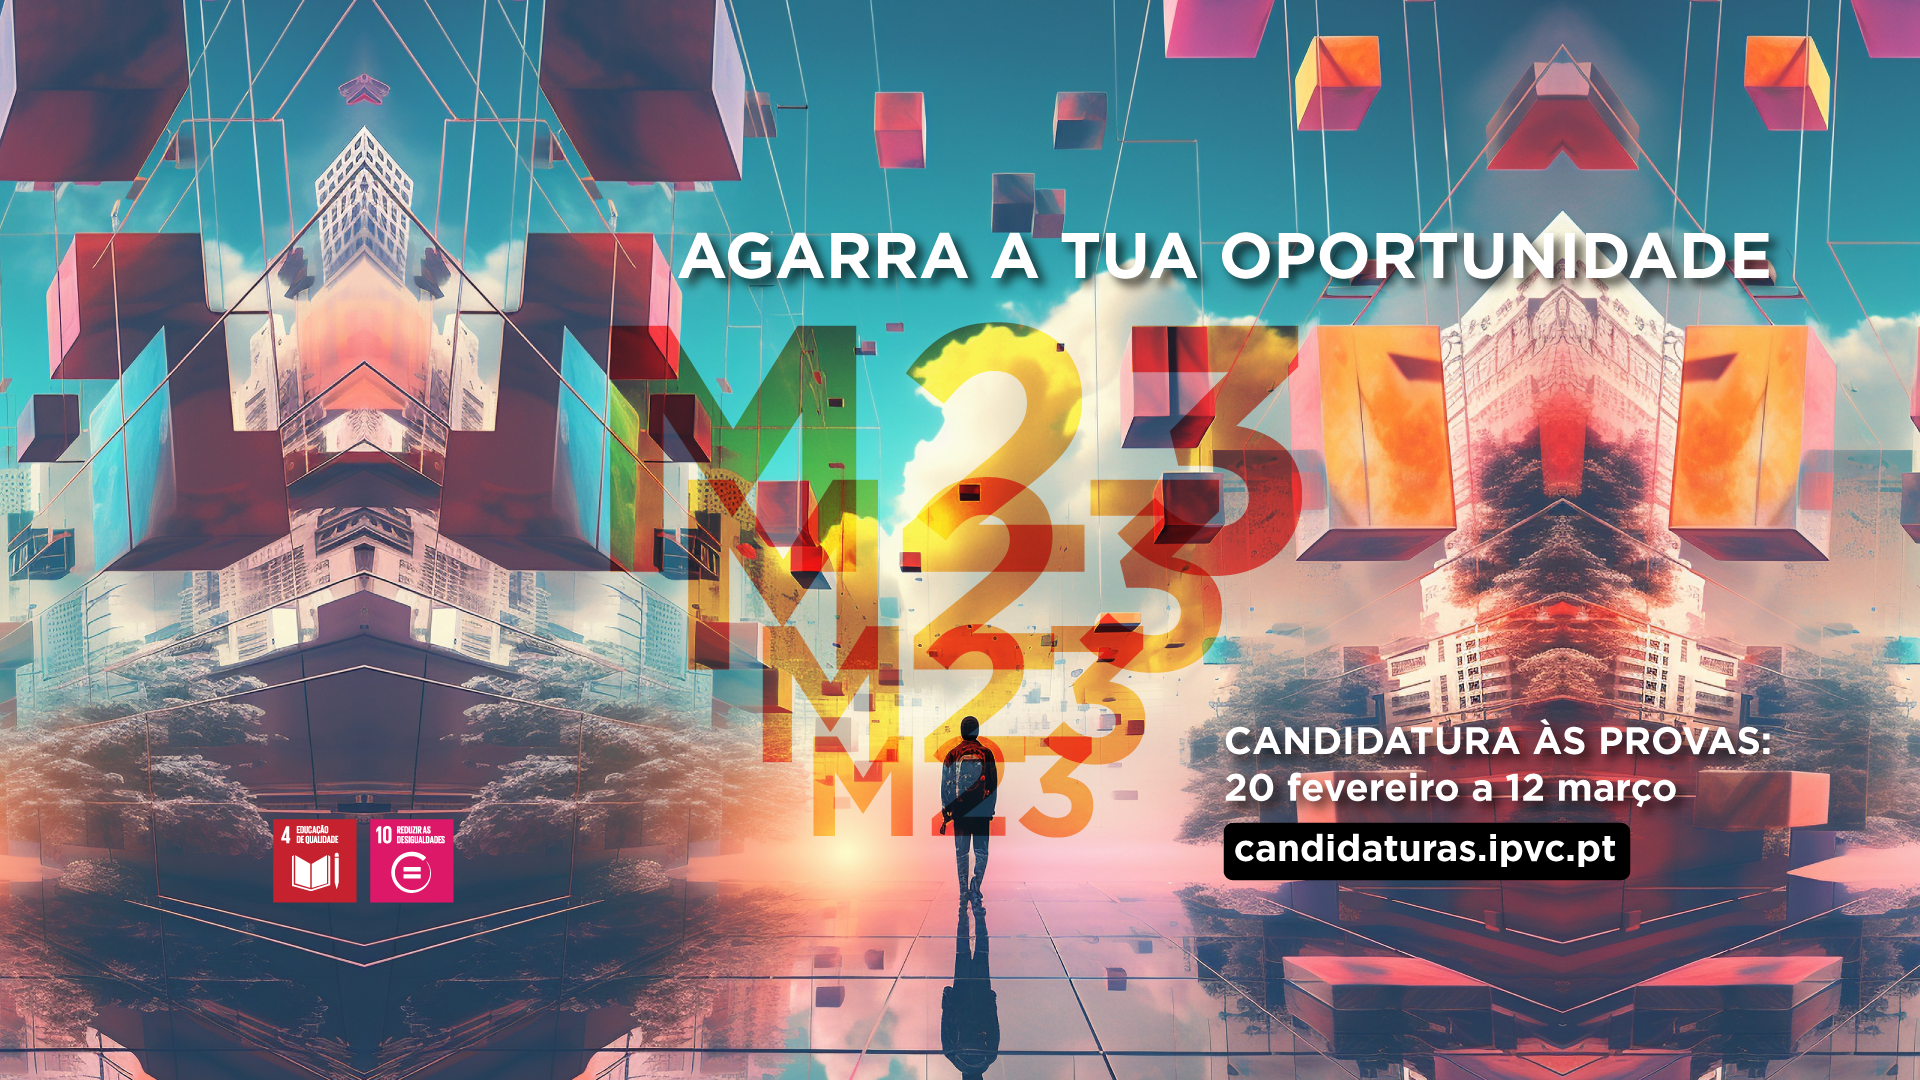 (Português) 1.ª fase | Candidaturas para as Provas M23<